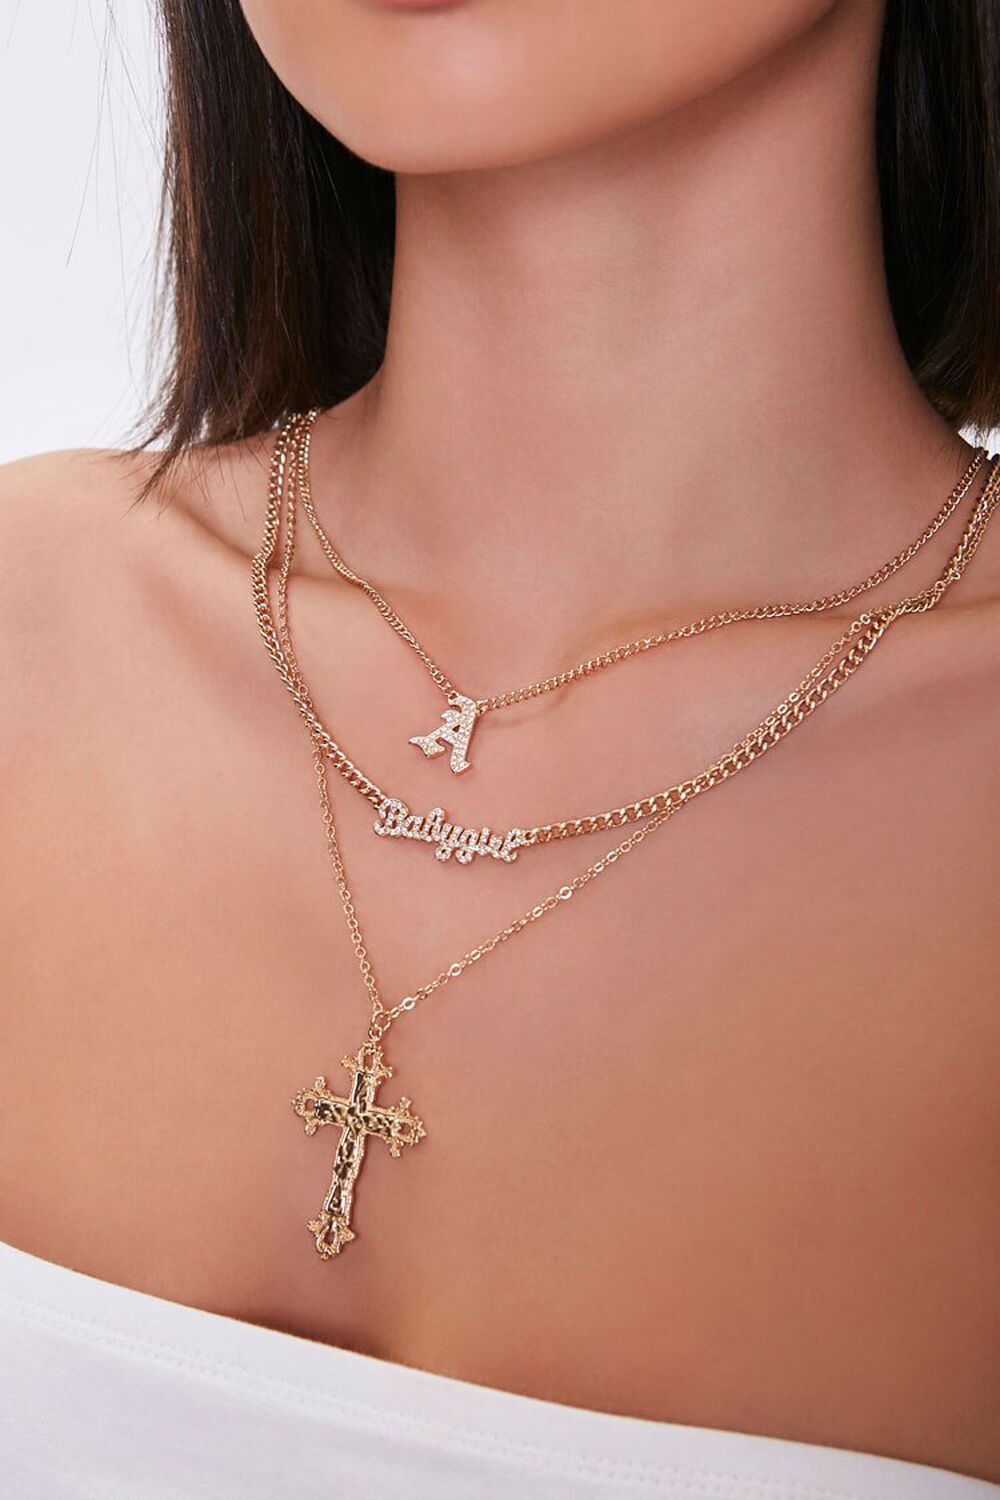 Babygirl & Cross Pendant Layered Necklace, image 1